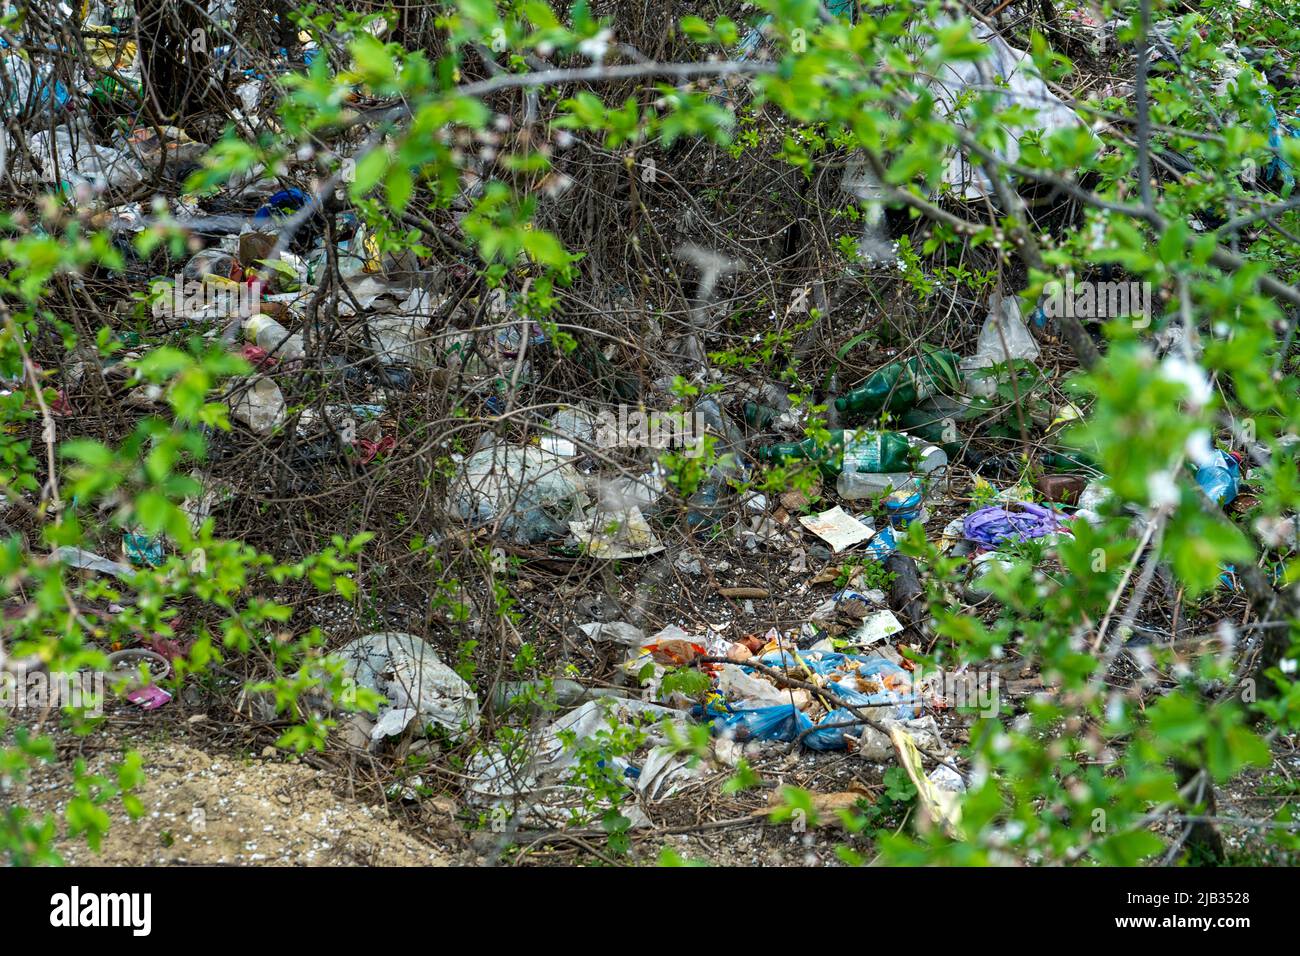 Verstreuter Plastikmüll in einem grünen Wald zwischen den Frühlingssträuchern, Umweltverschmutzung Stockfoto